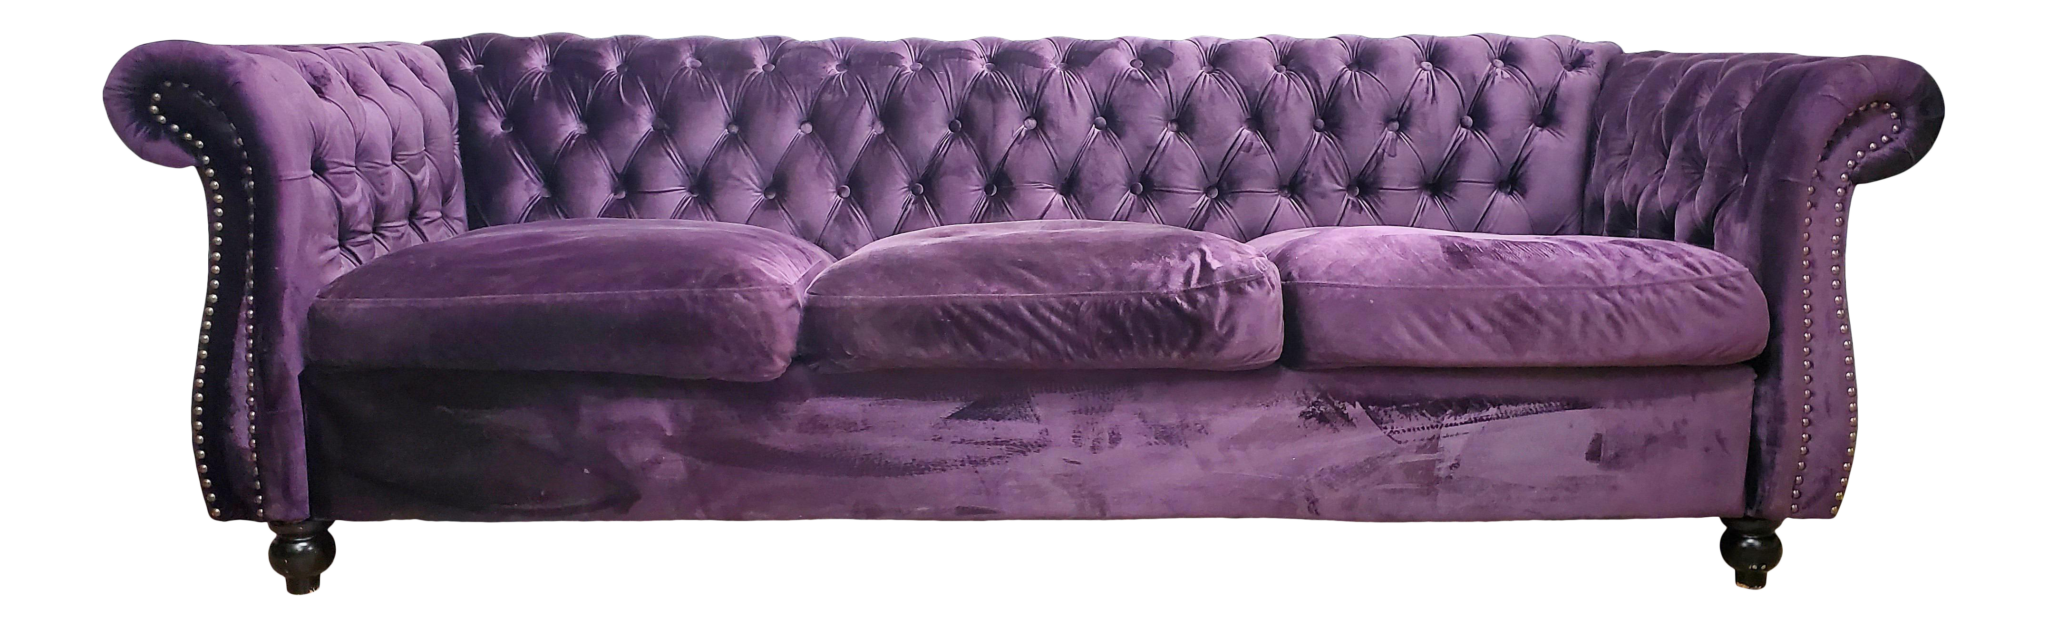 Vintage Inspired Purple Velvet Tufted Couch 8215 2048x627 